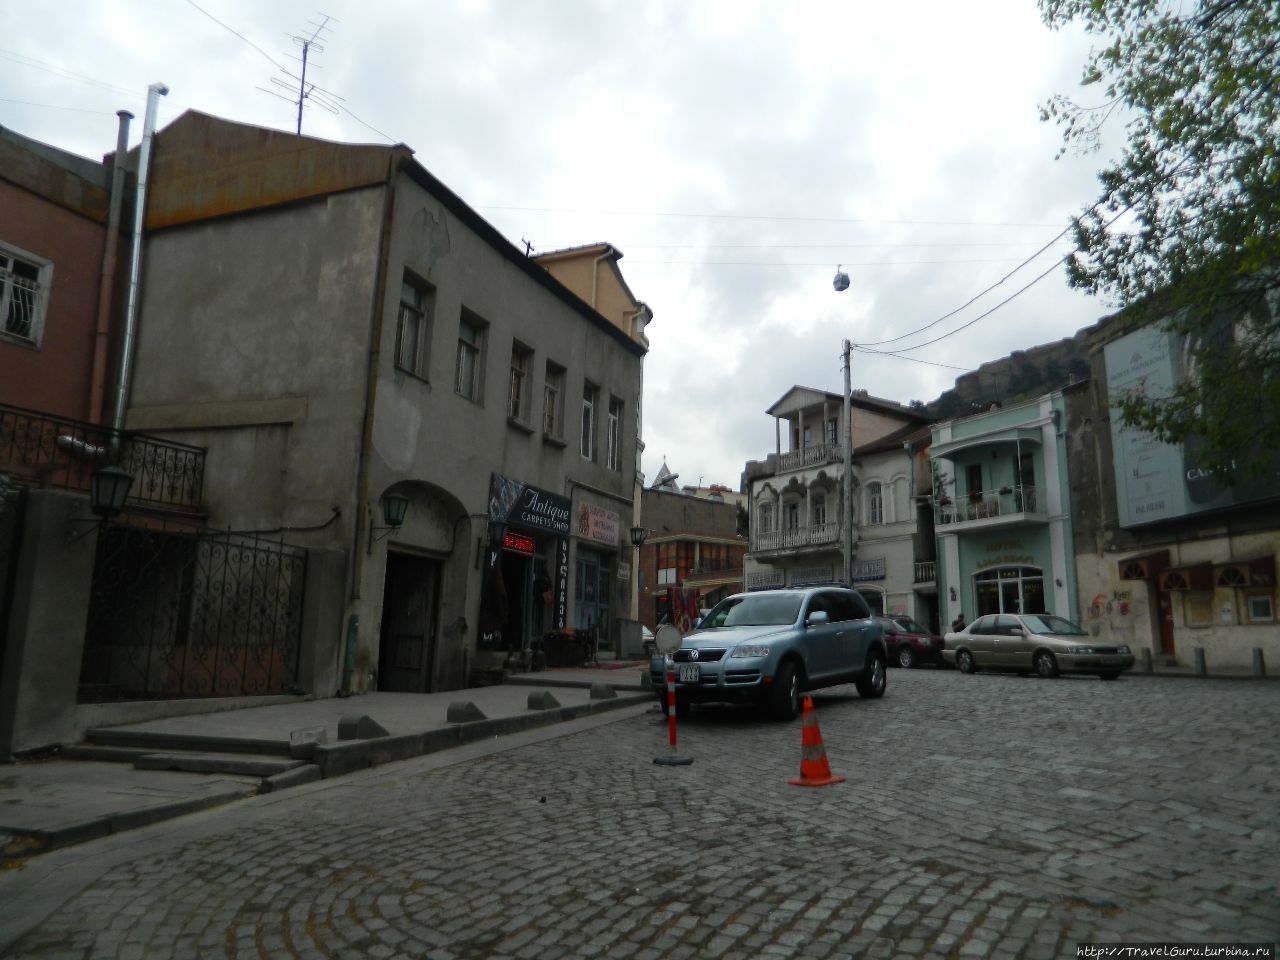 Улочки старого города Тбилиси, Грузия